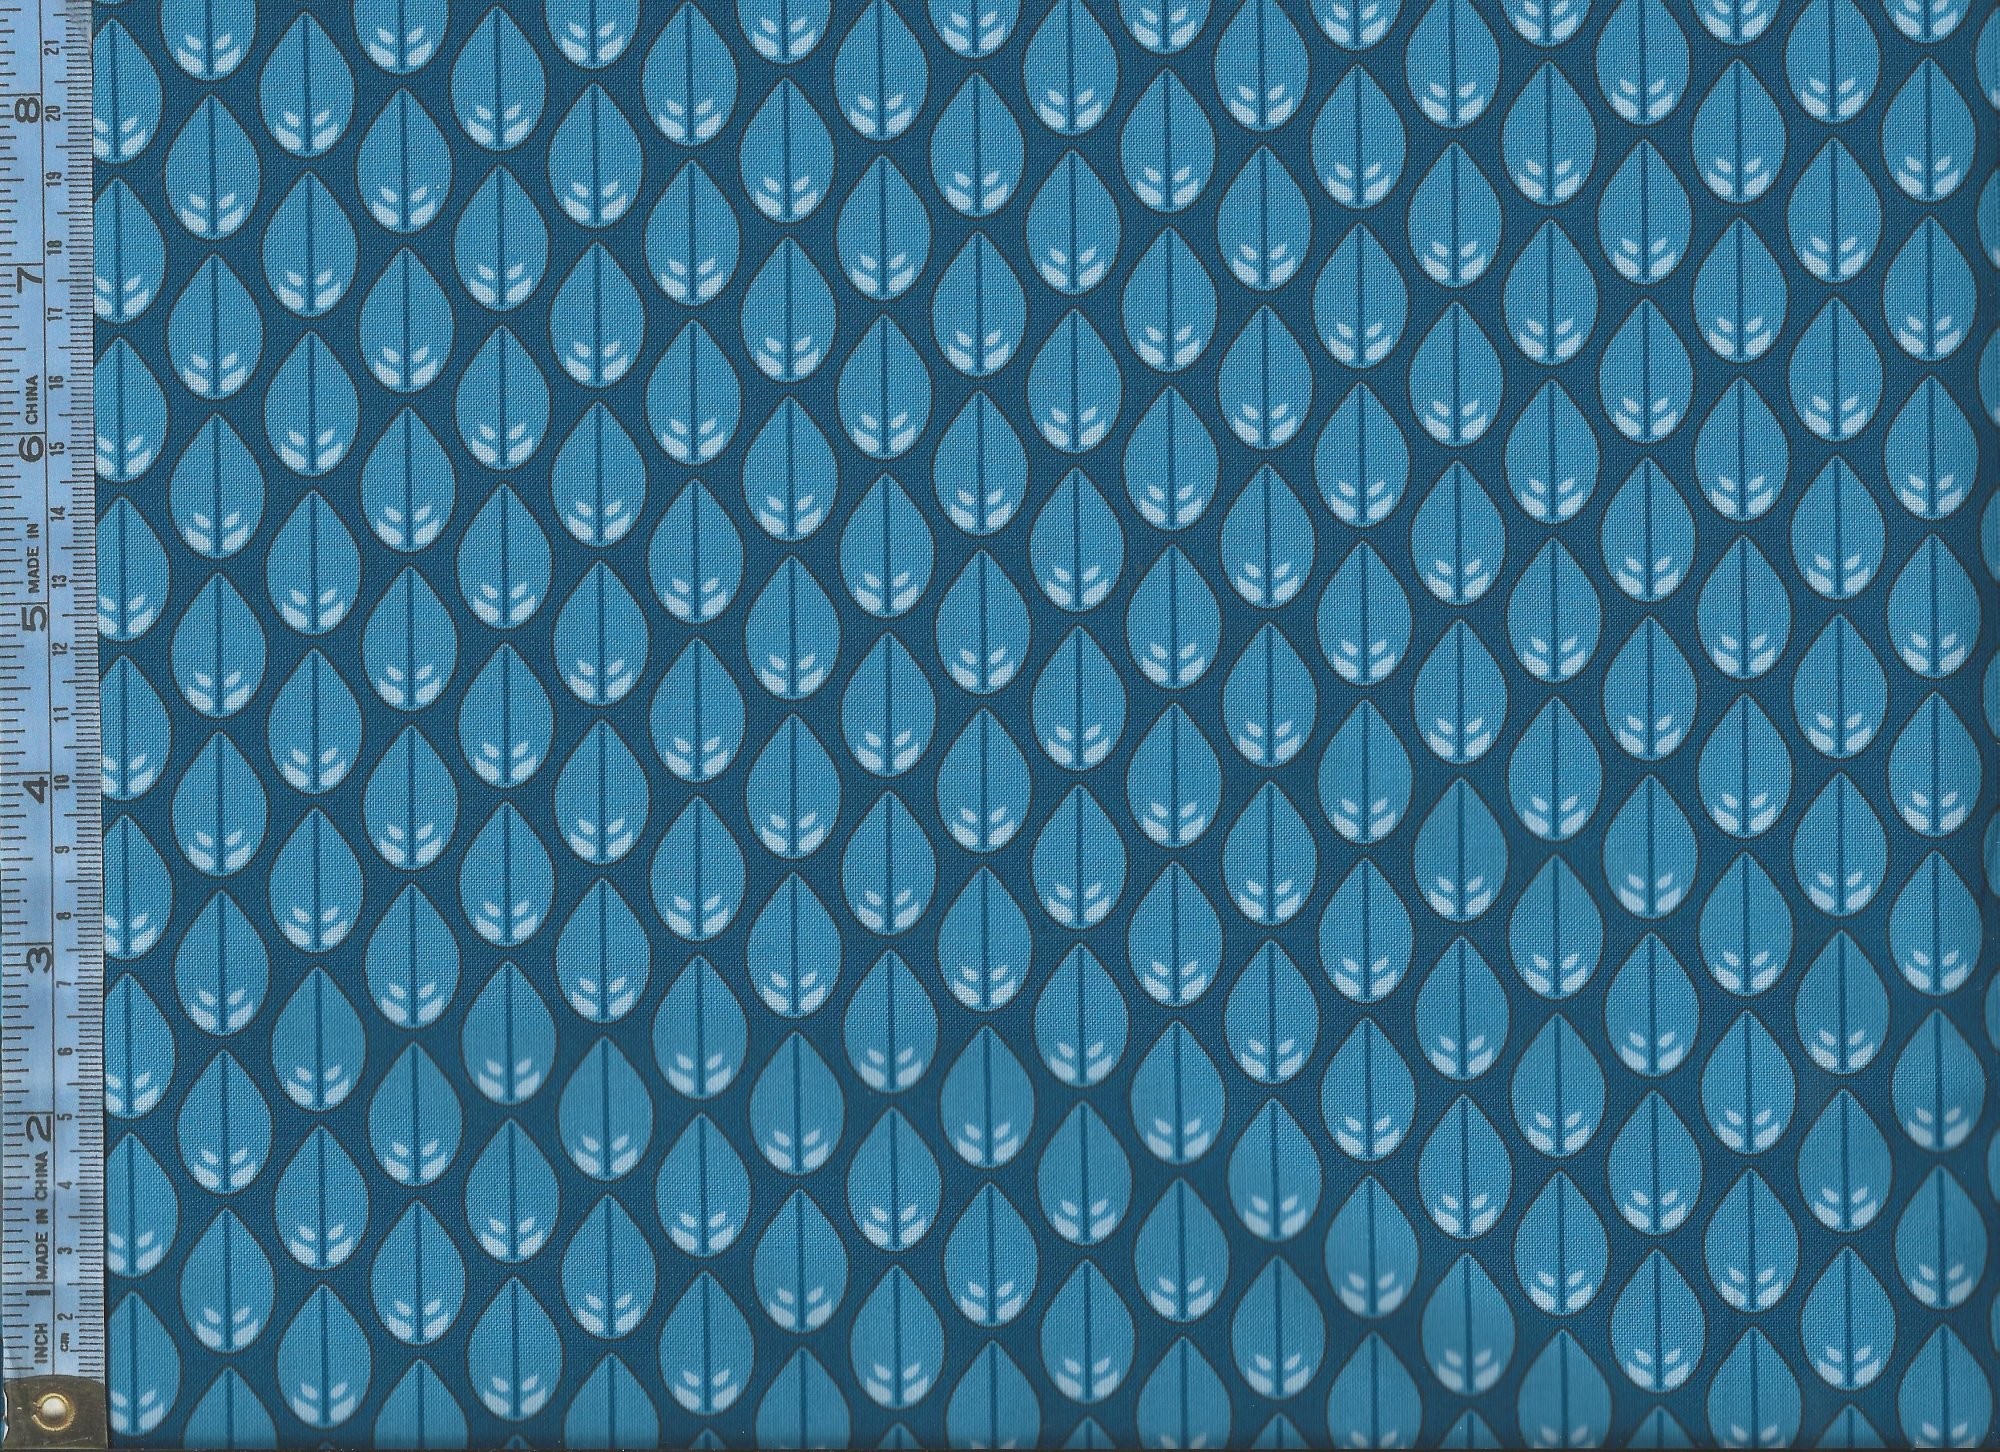 2000x1452 Cascade - blue leaf shapes on navy blue background